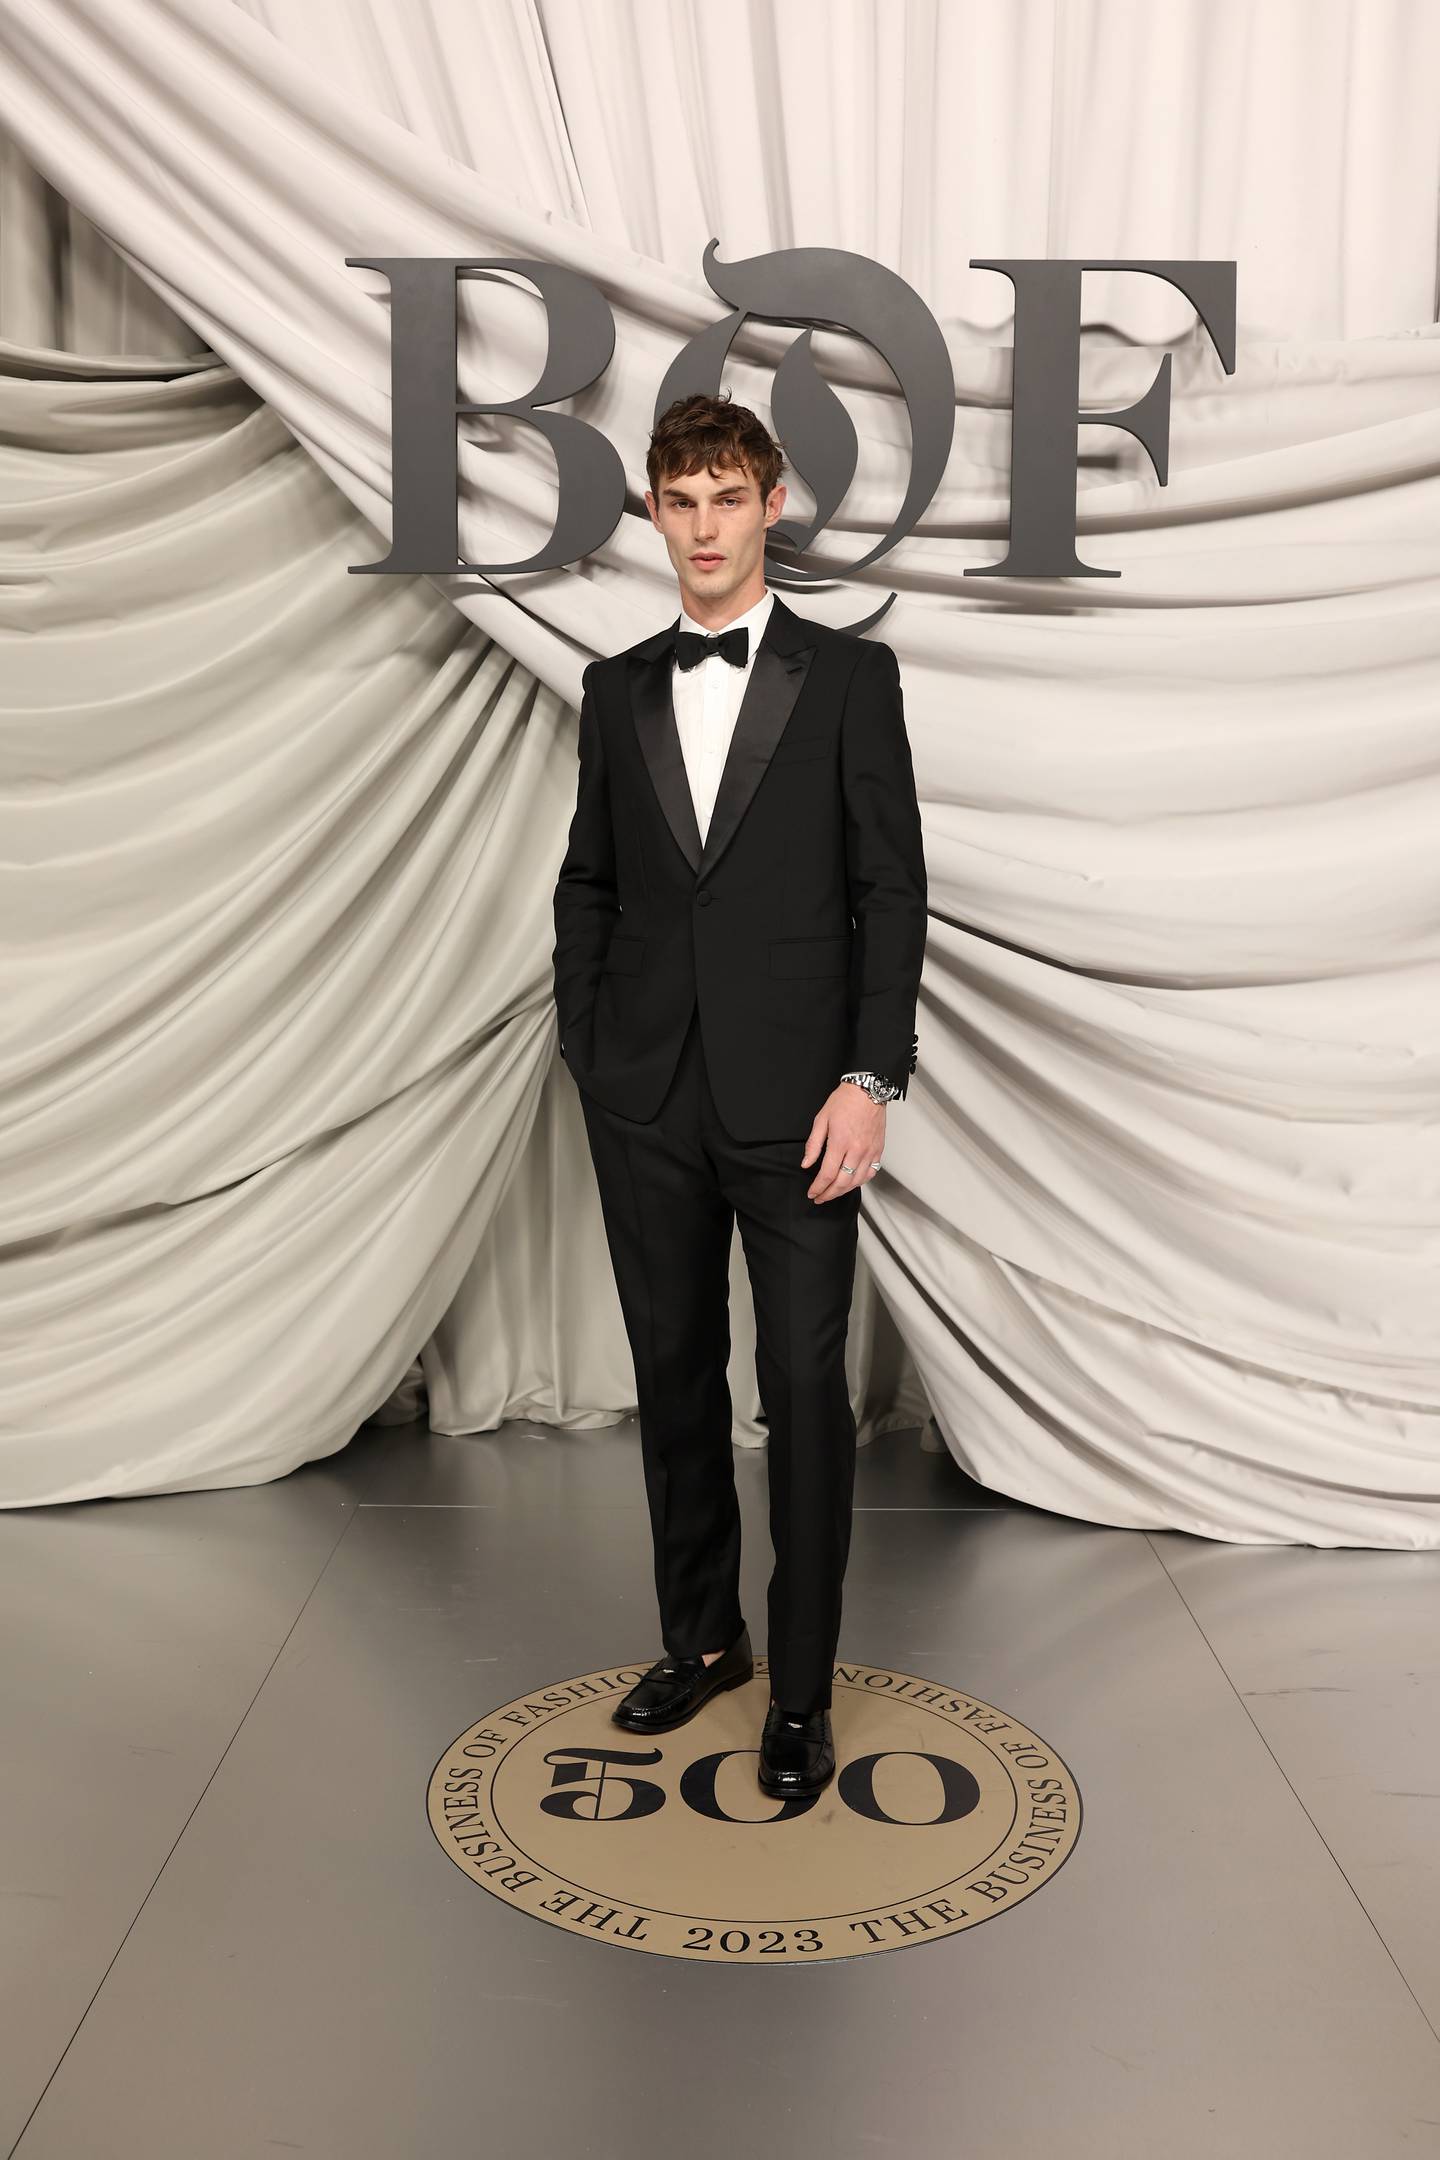 Kit Butler attends the #BoF500 Gala during Paris Fashion Week at Shangri-La Hotel Paris on September 30, 2023 in Paris, France.